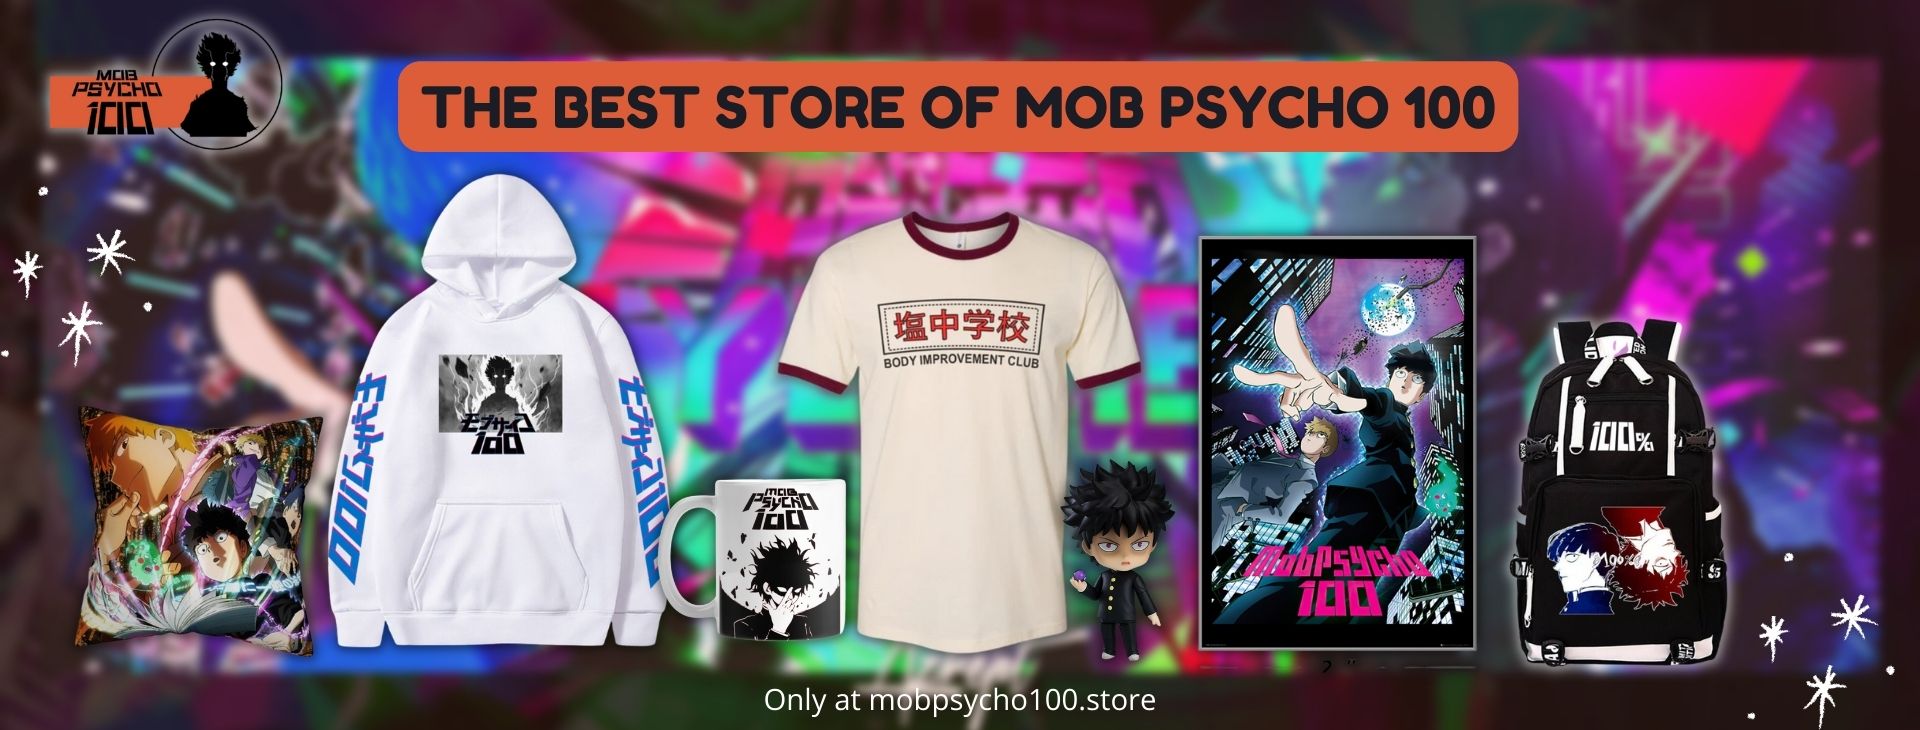 Mob Psycho 100 Banner - Mob Psycho 100 Store